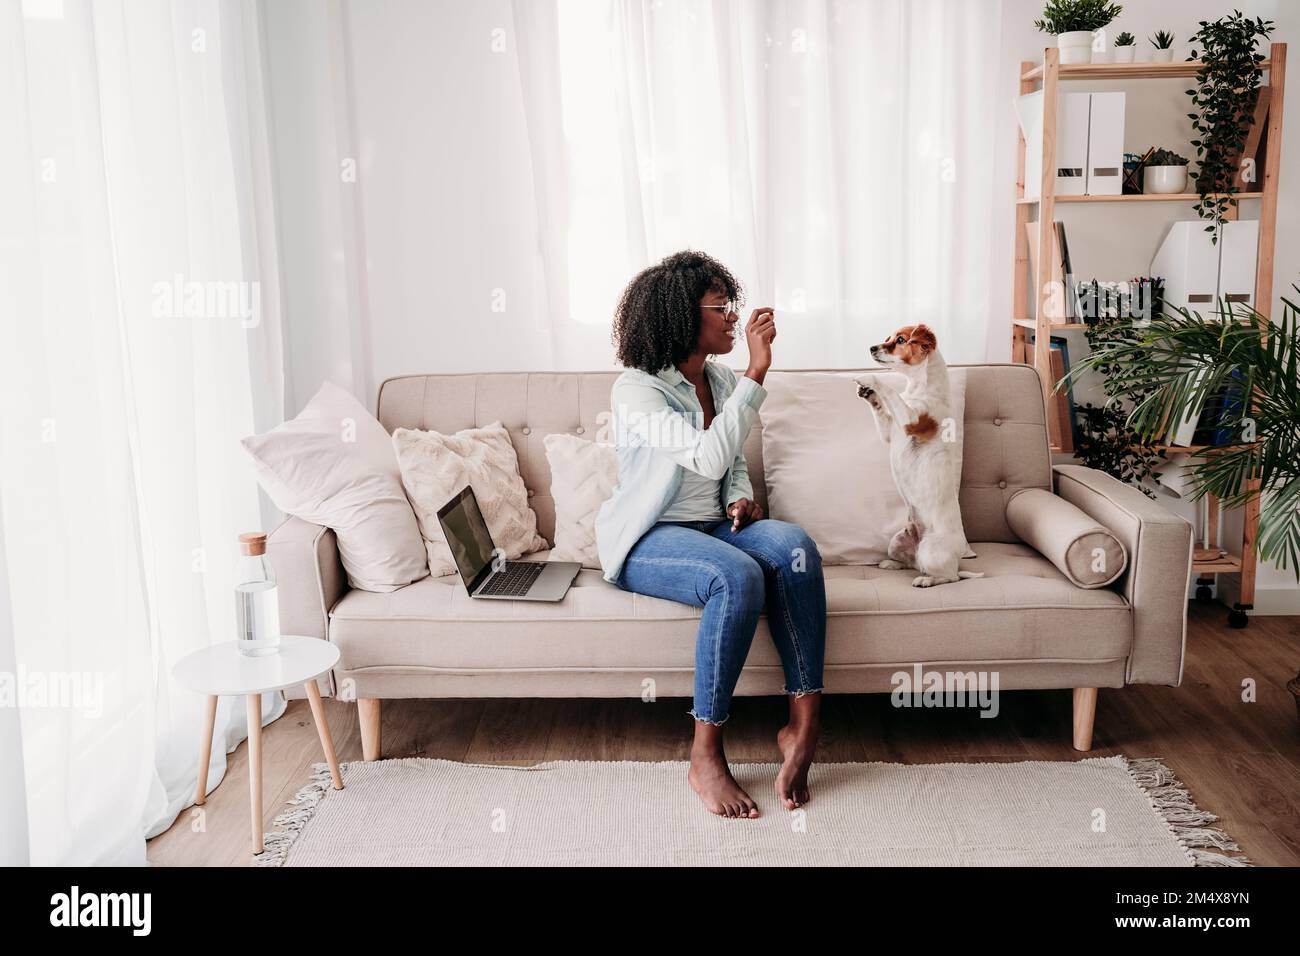 Woman feeding dog rearing up on sofa at home Stock Photo